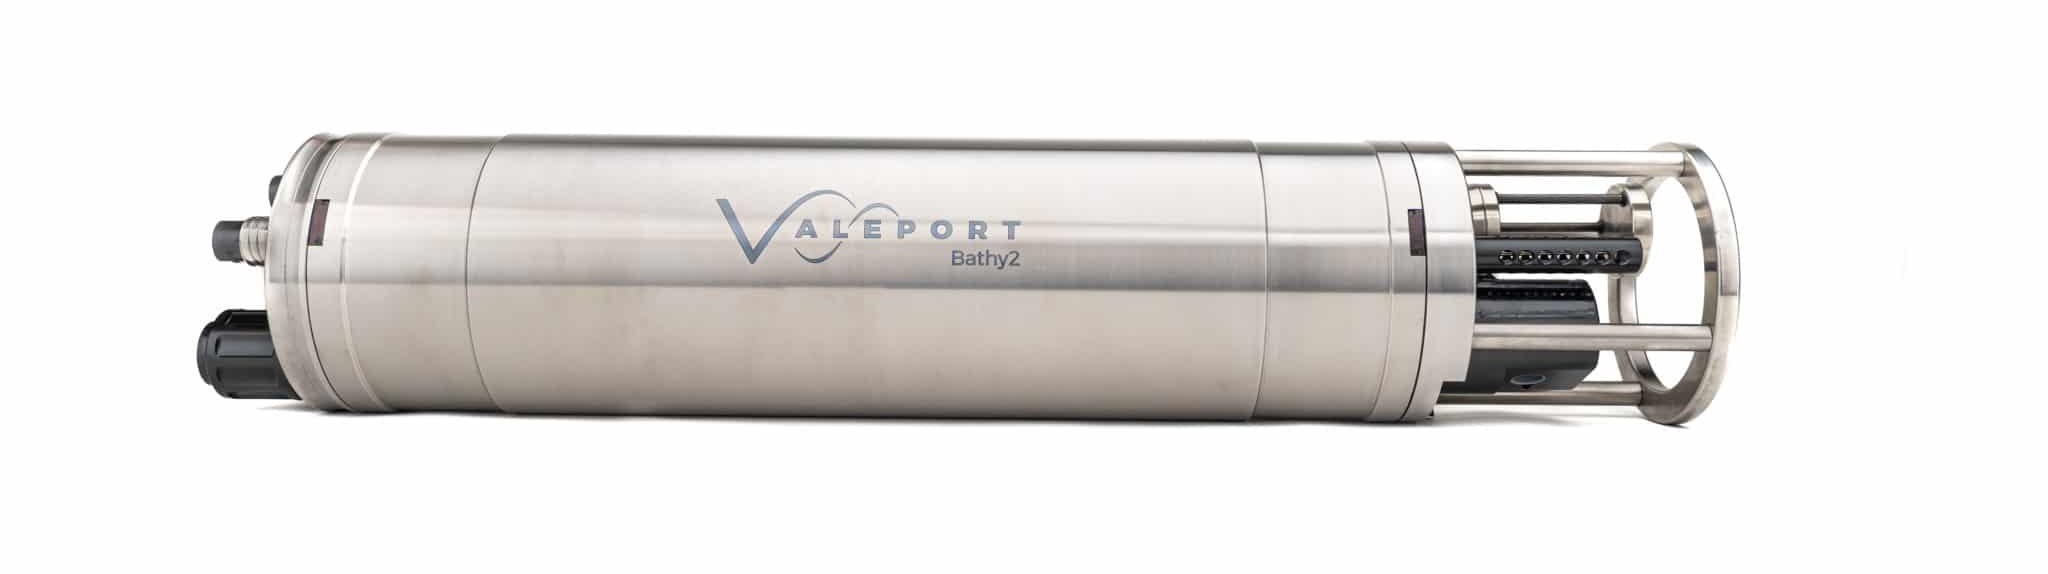 valeport | bathy2| batimetría ROV | svp | altimetro rov | nautilus oceanica